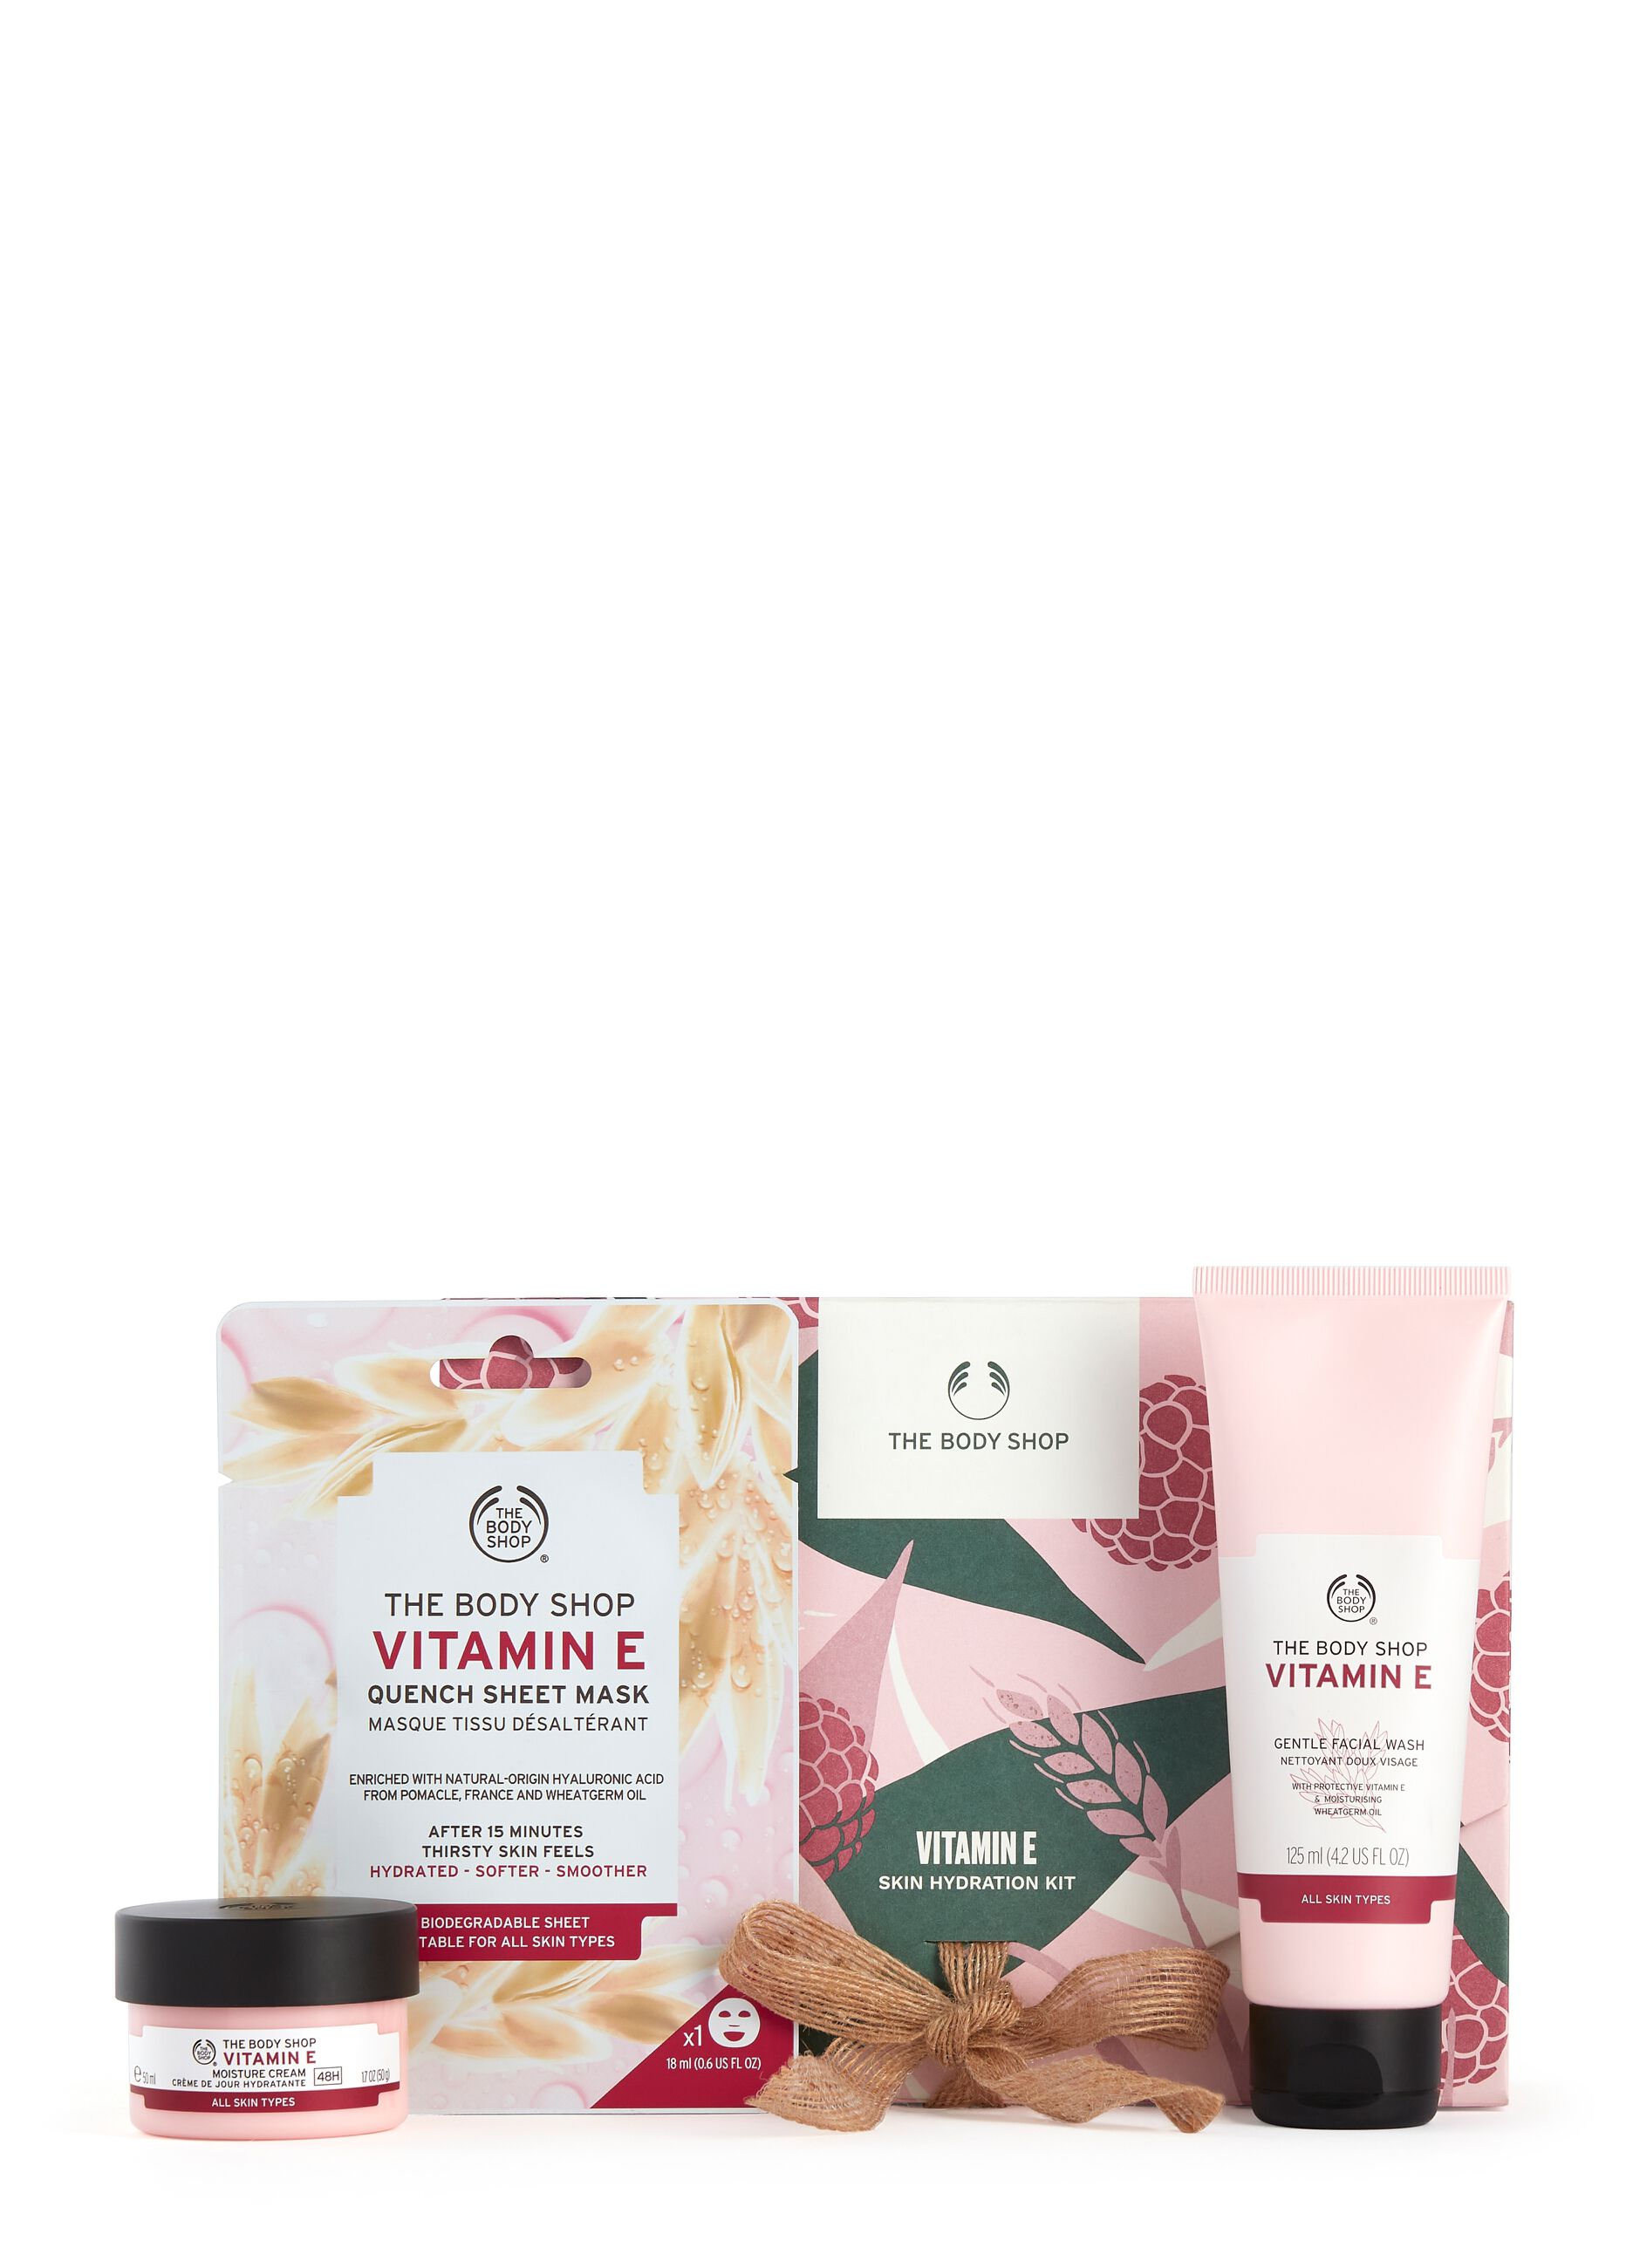 The Body Shop skin moisturising kit with vitamin E